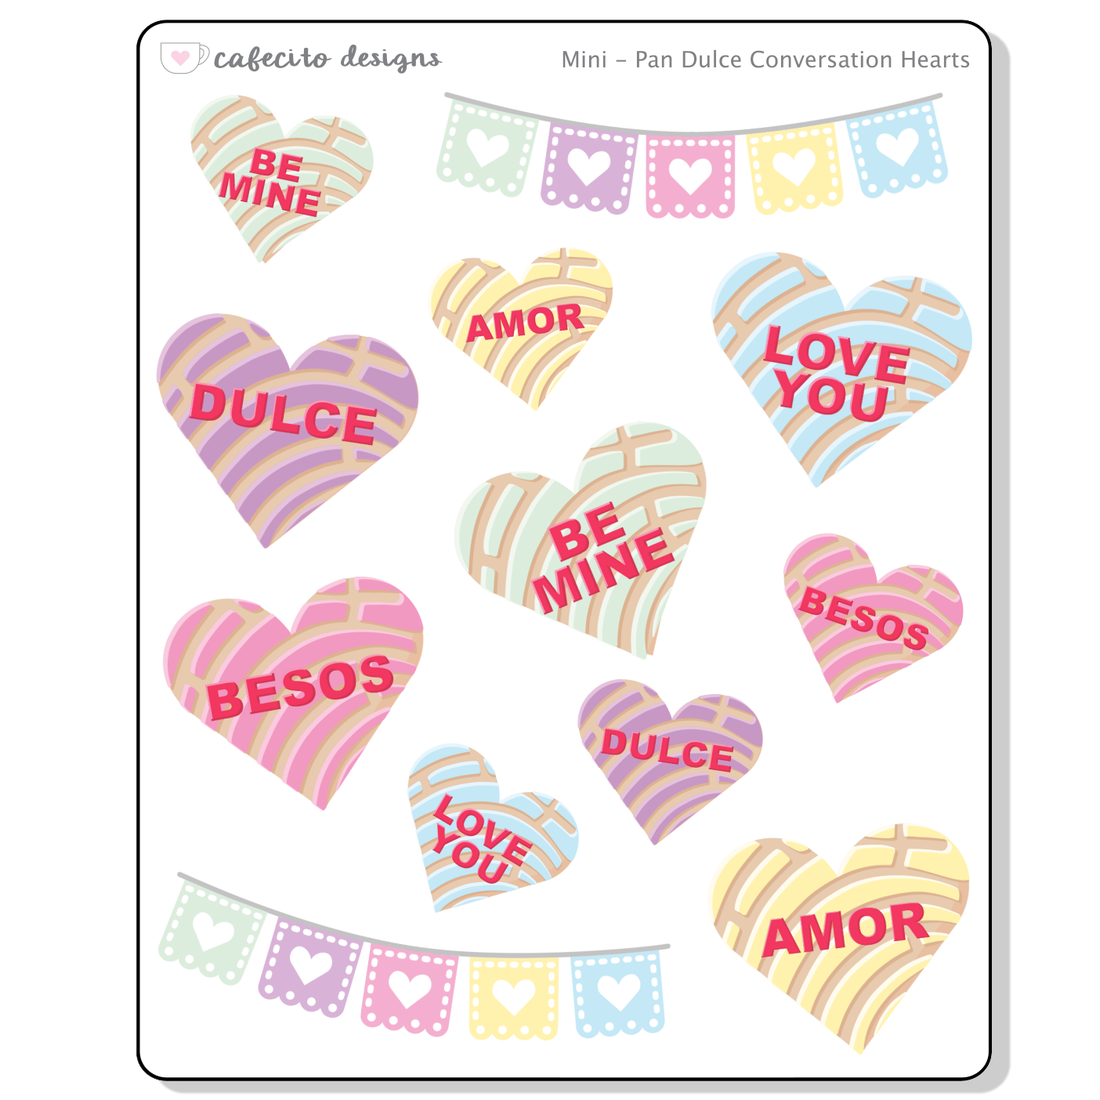 Pan Dulce Conversation Hearts - Mini Deco Sticker Sheet